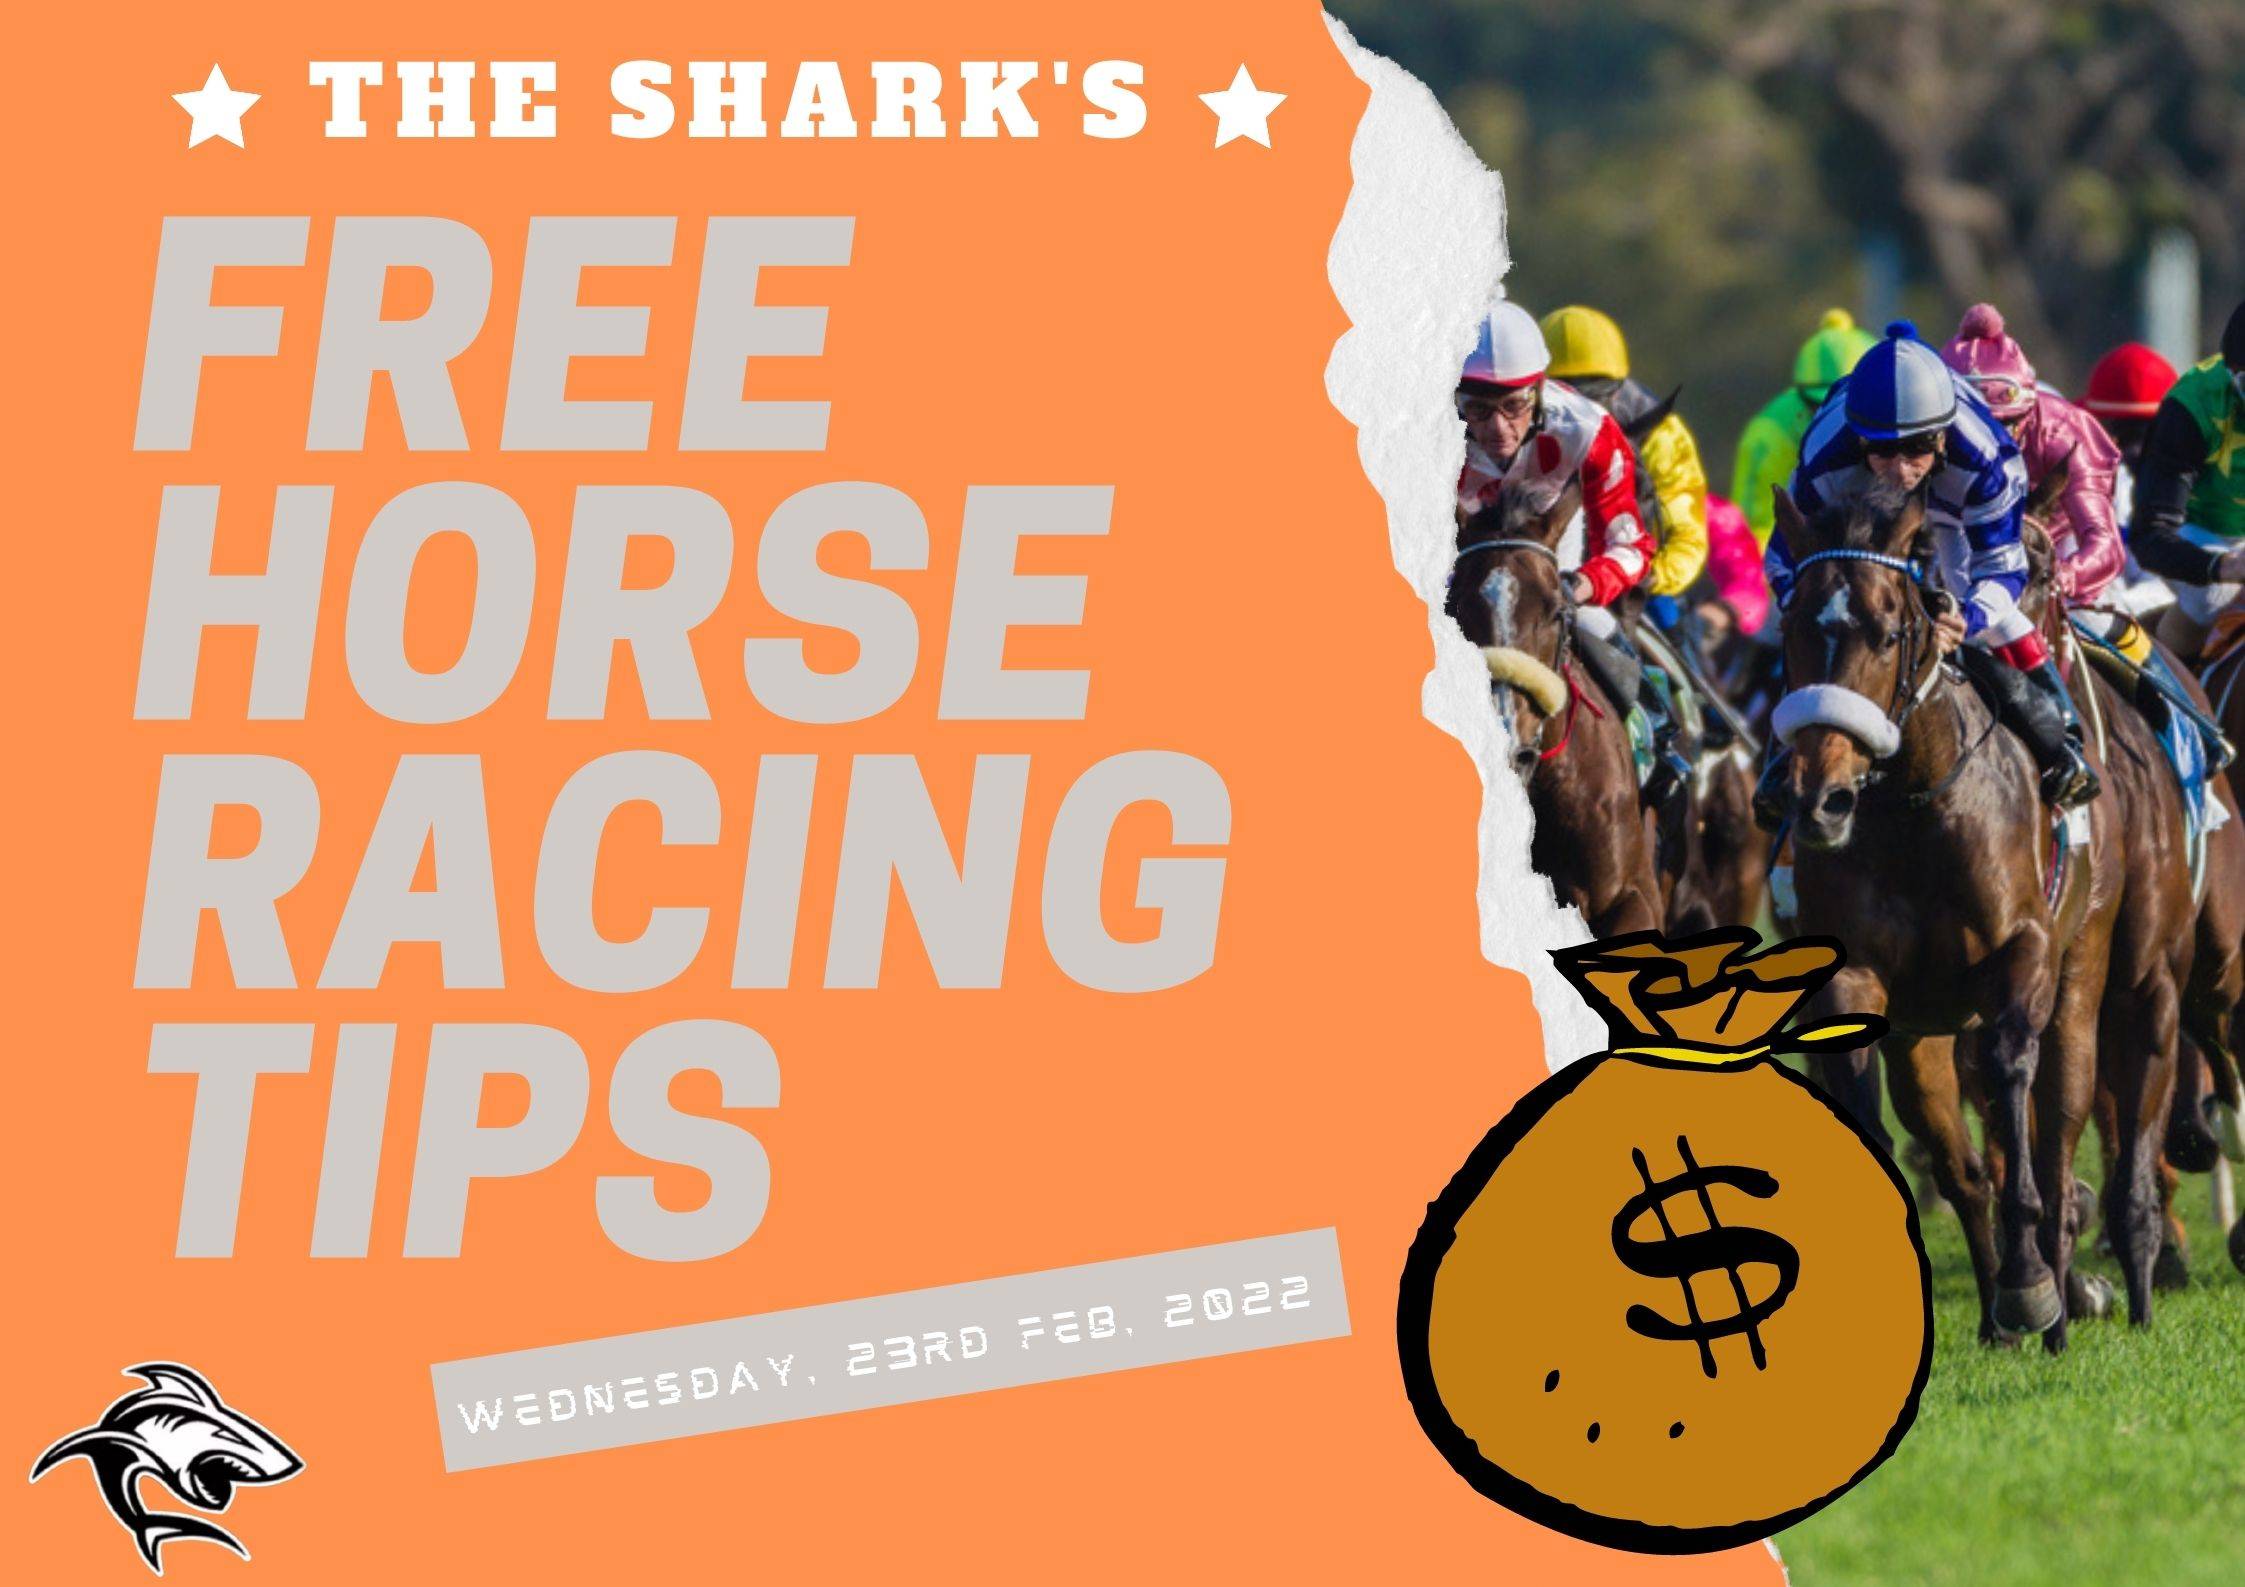 Free Horse Racing Tips - 23rd Feb